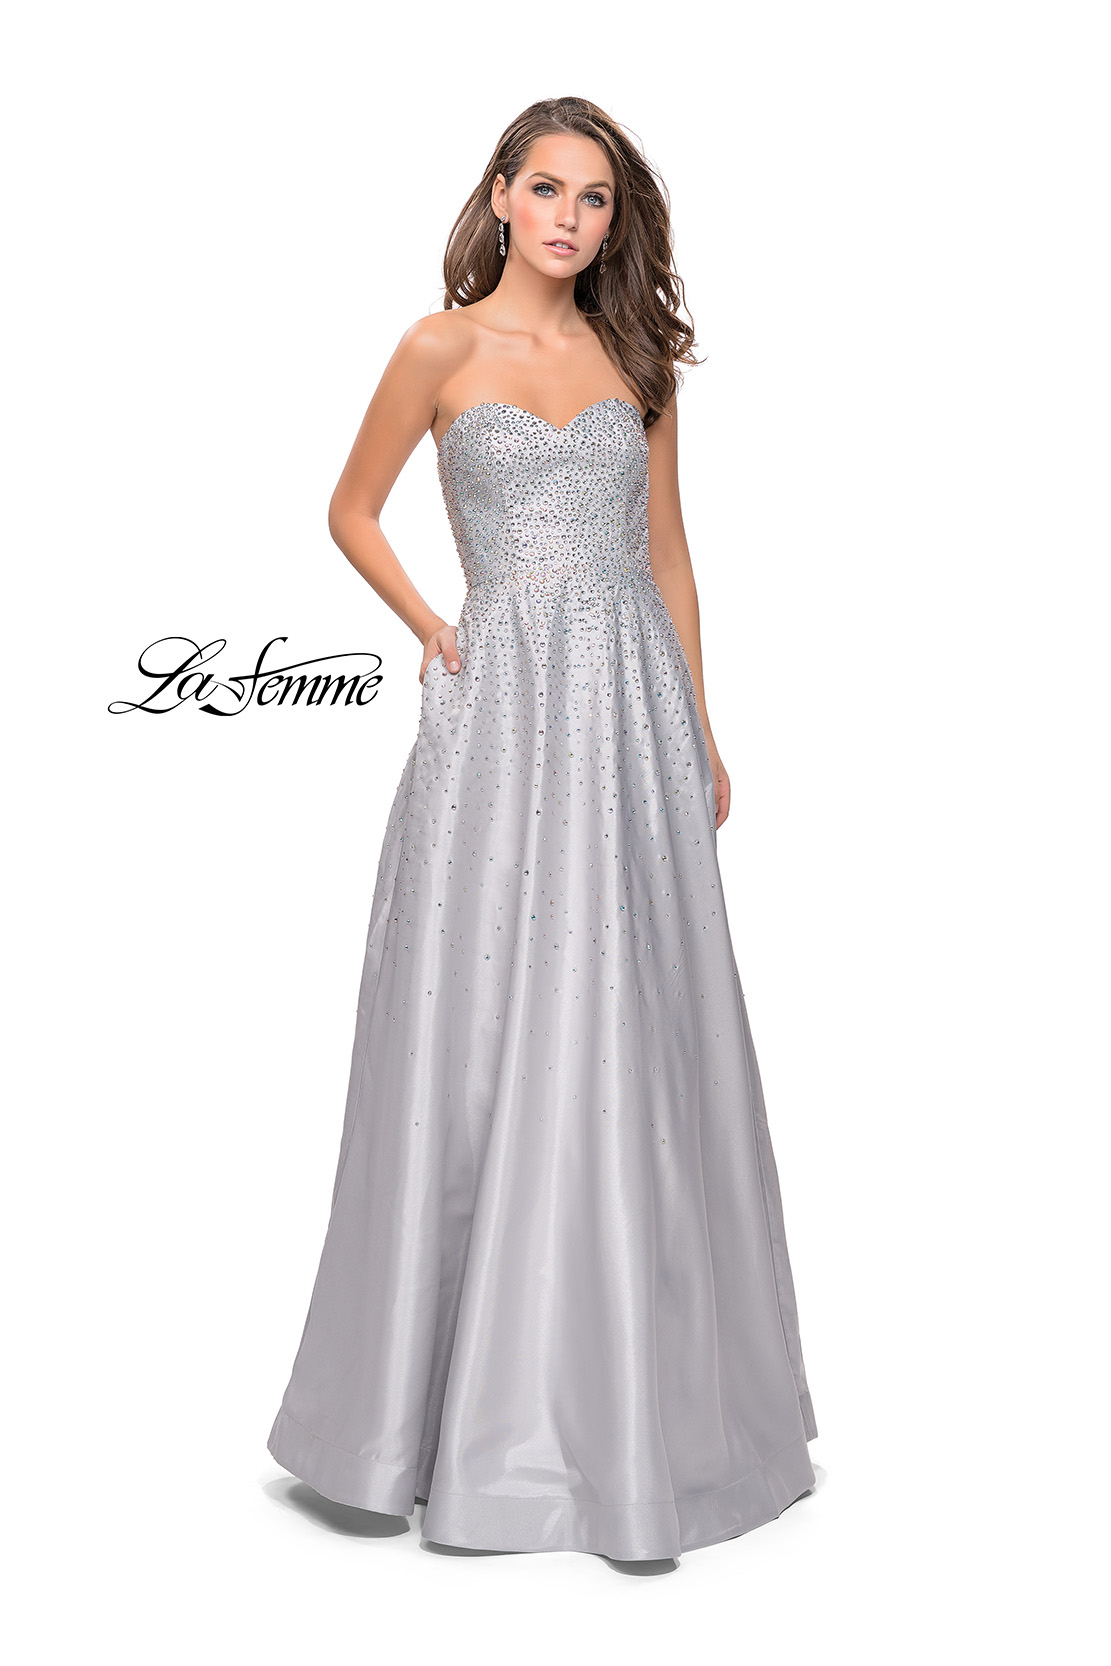 silver strapless prom dress